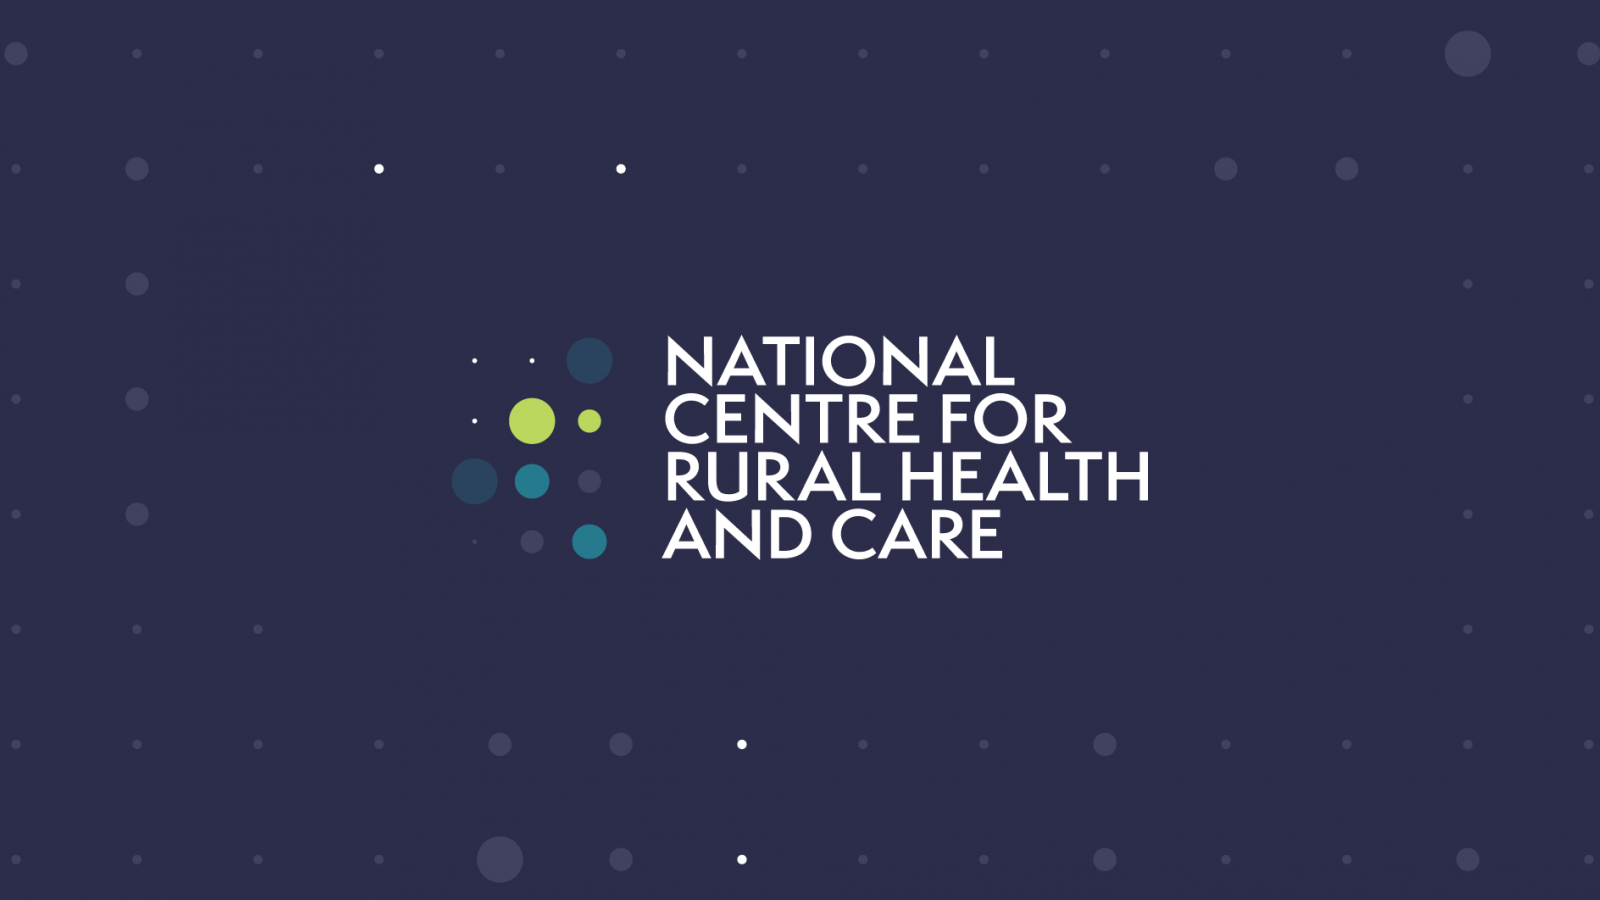 Covid response hits rural NHS services hard – report